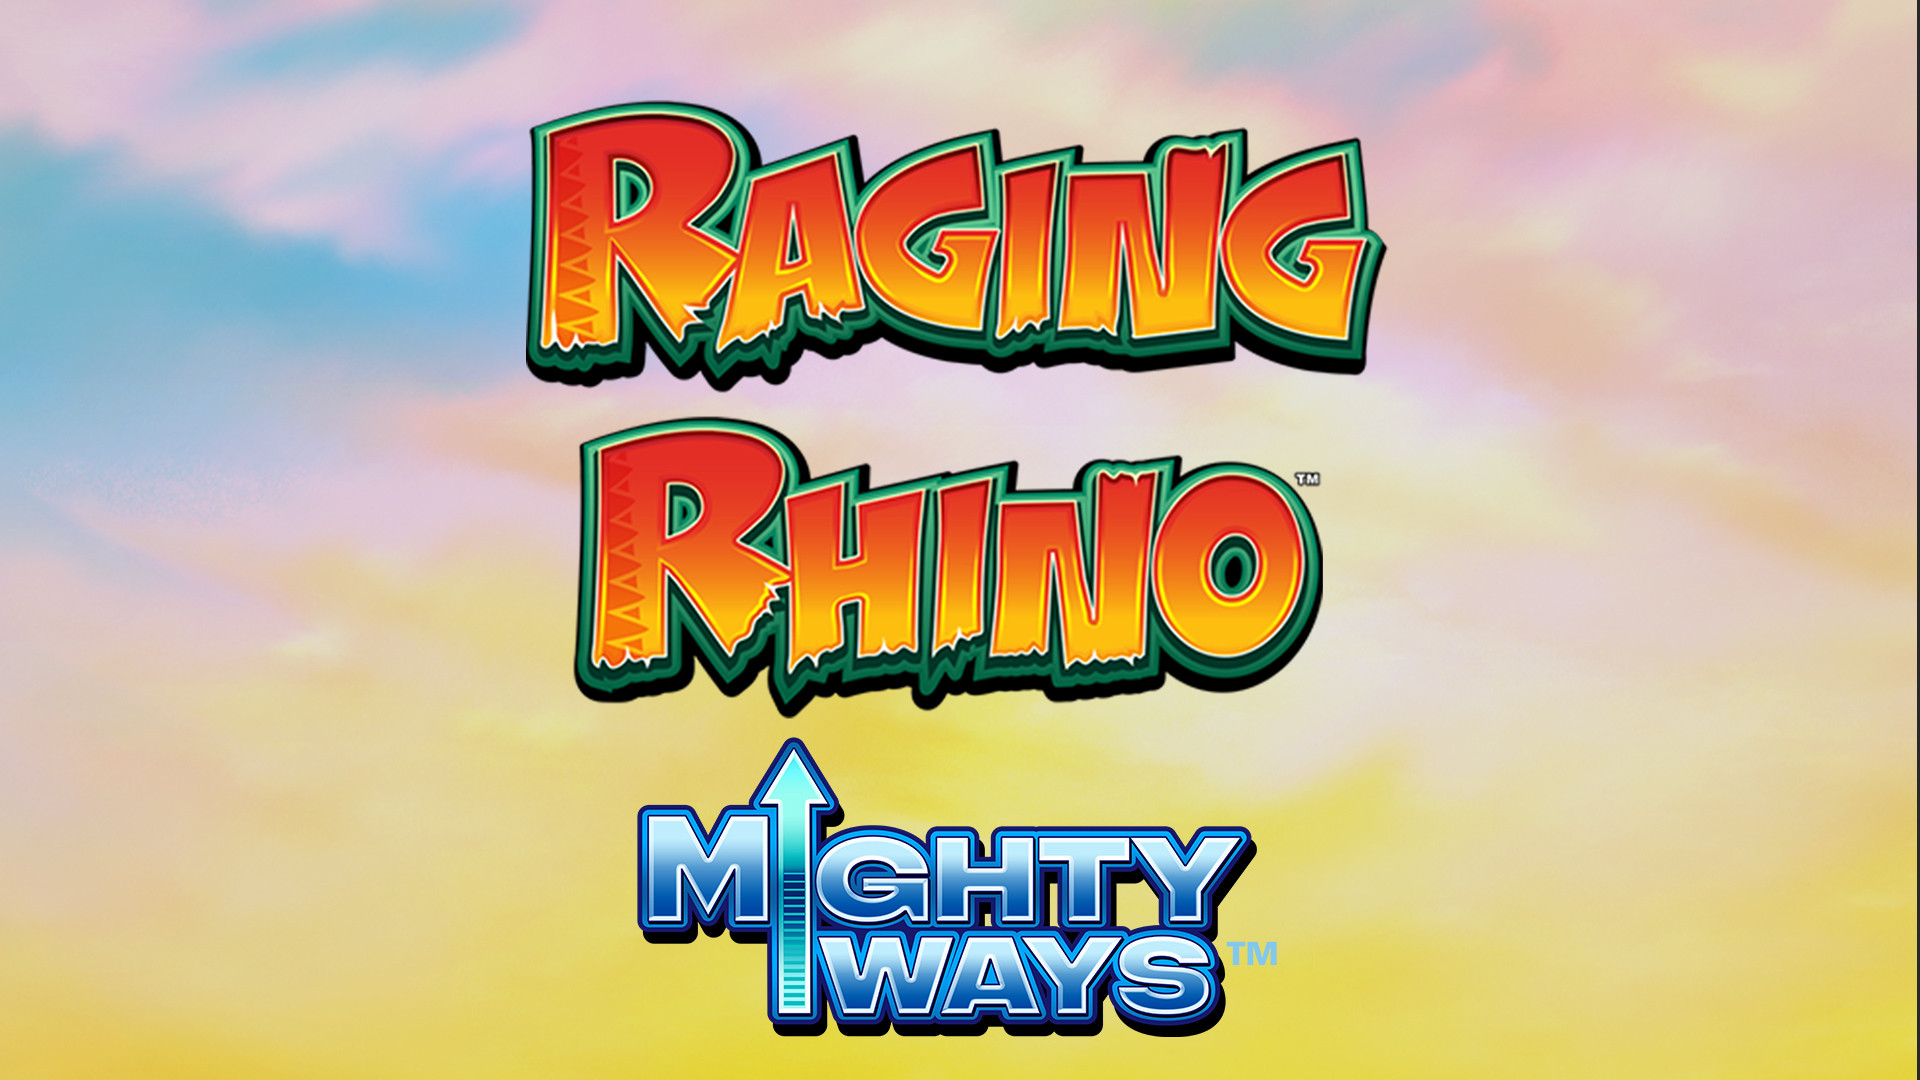 Raging Rhino Mightyways